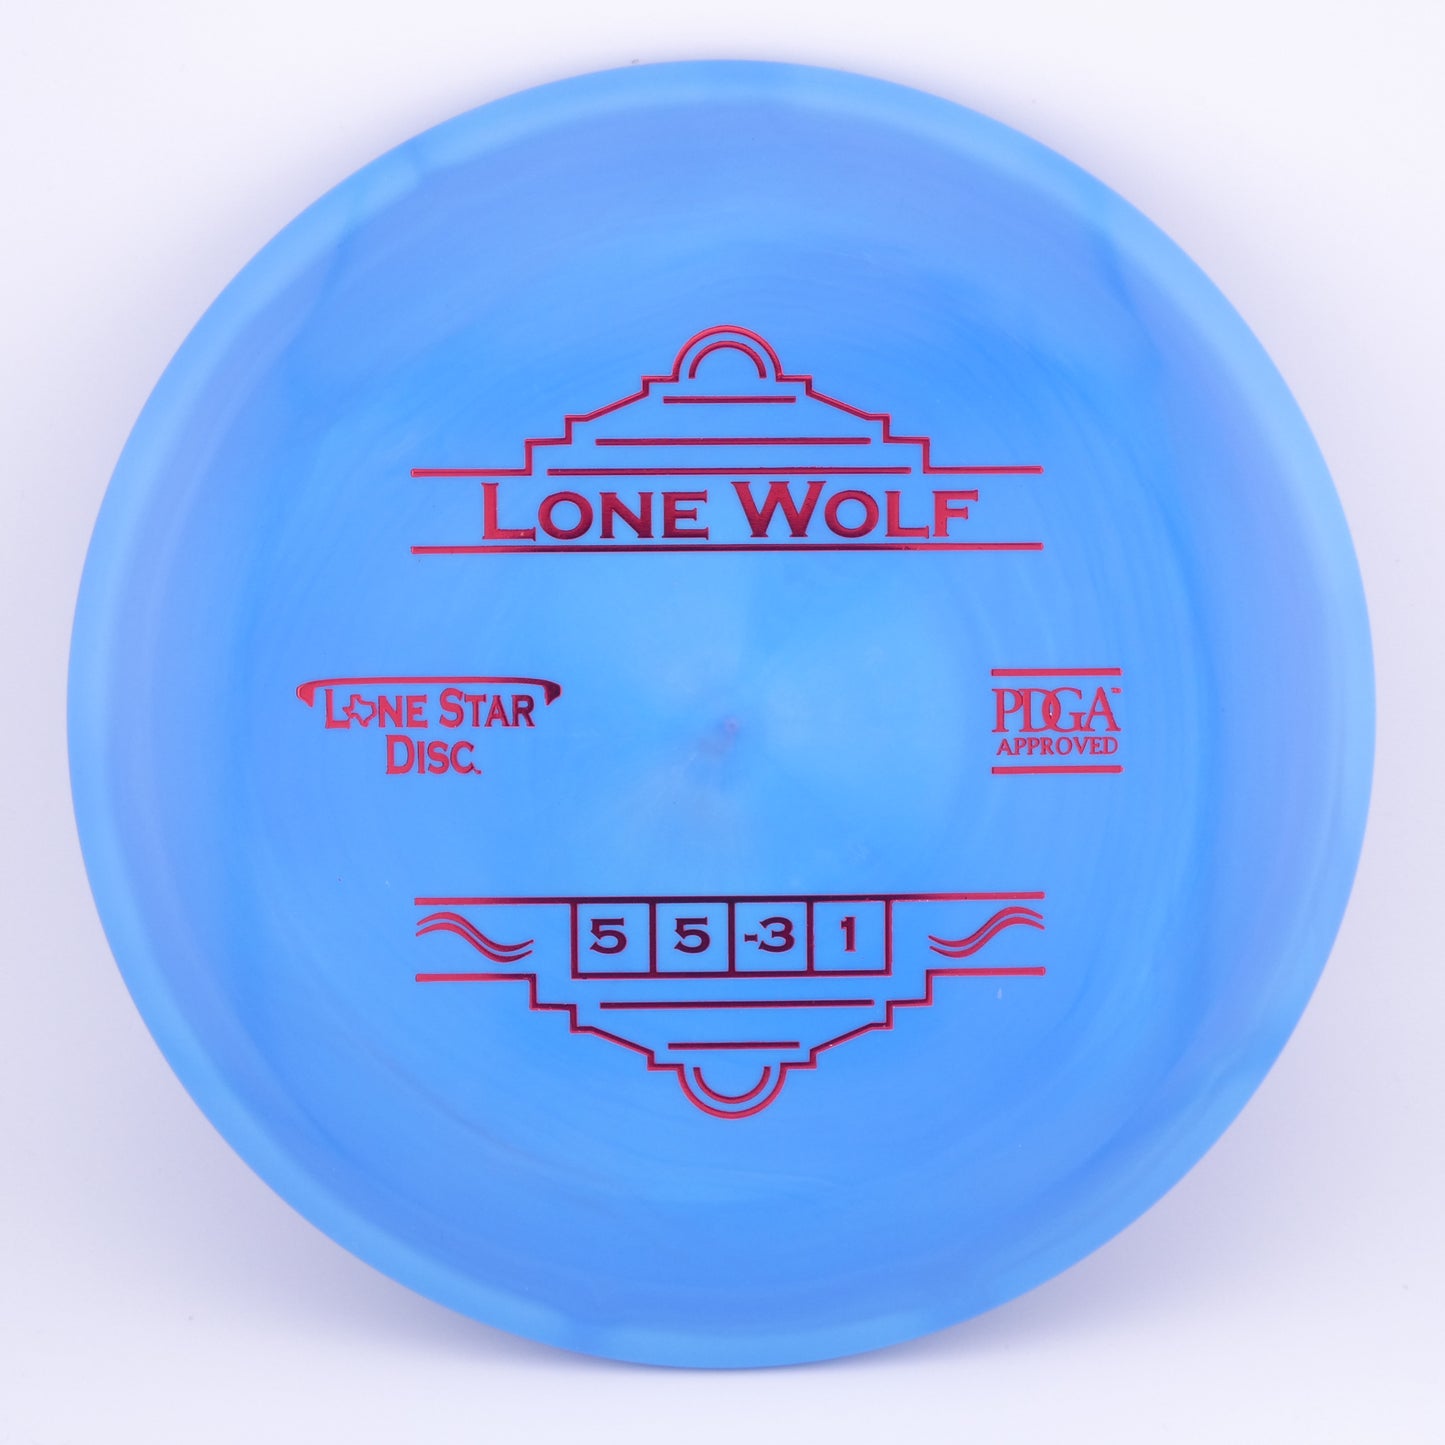 Bravo Lonewolf 170-176g